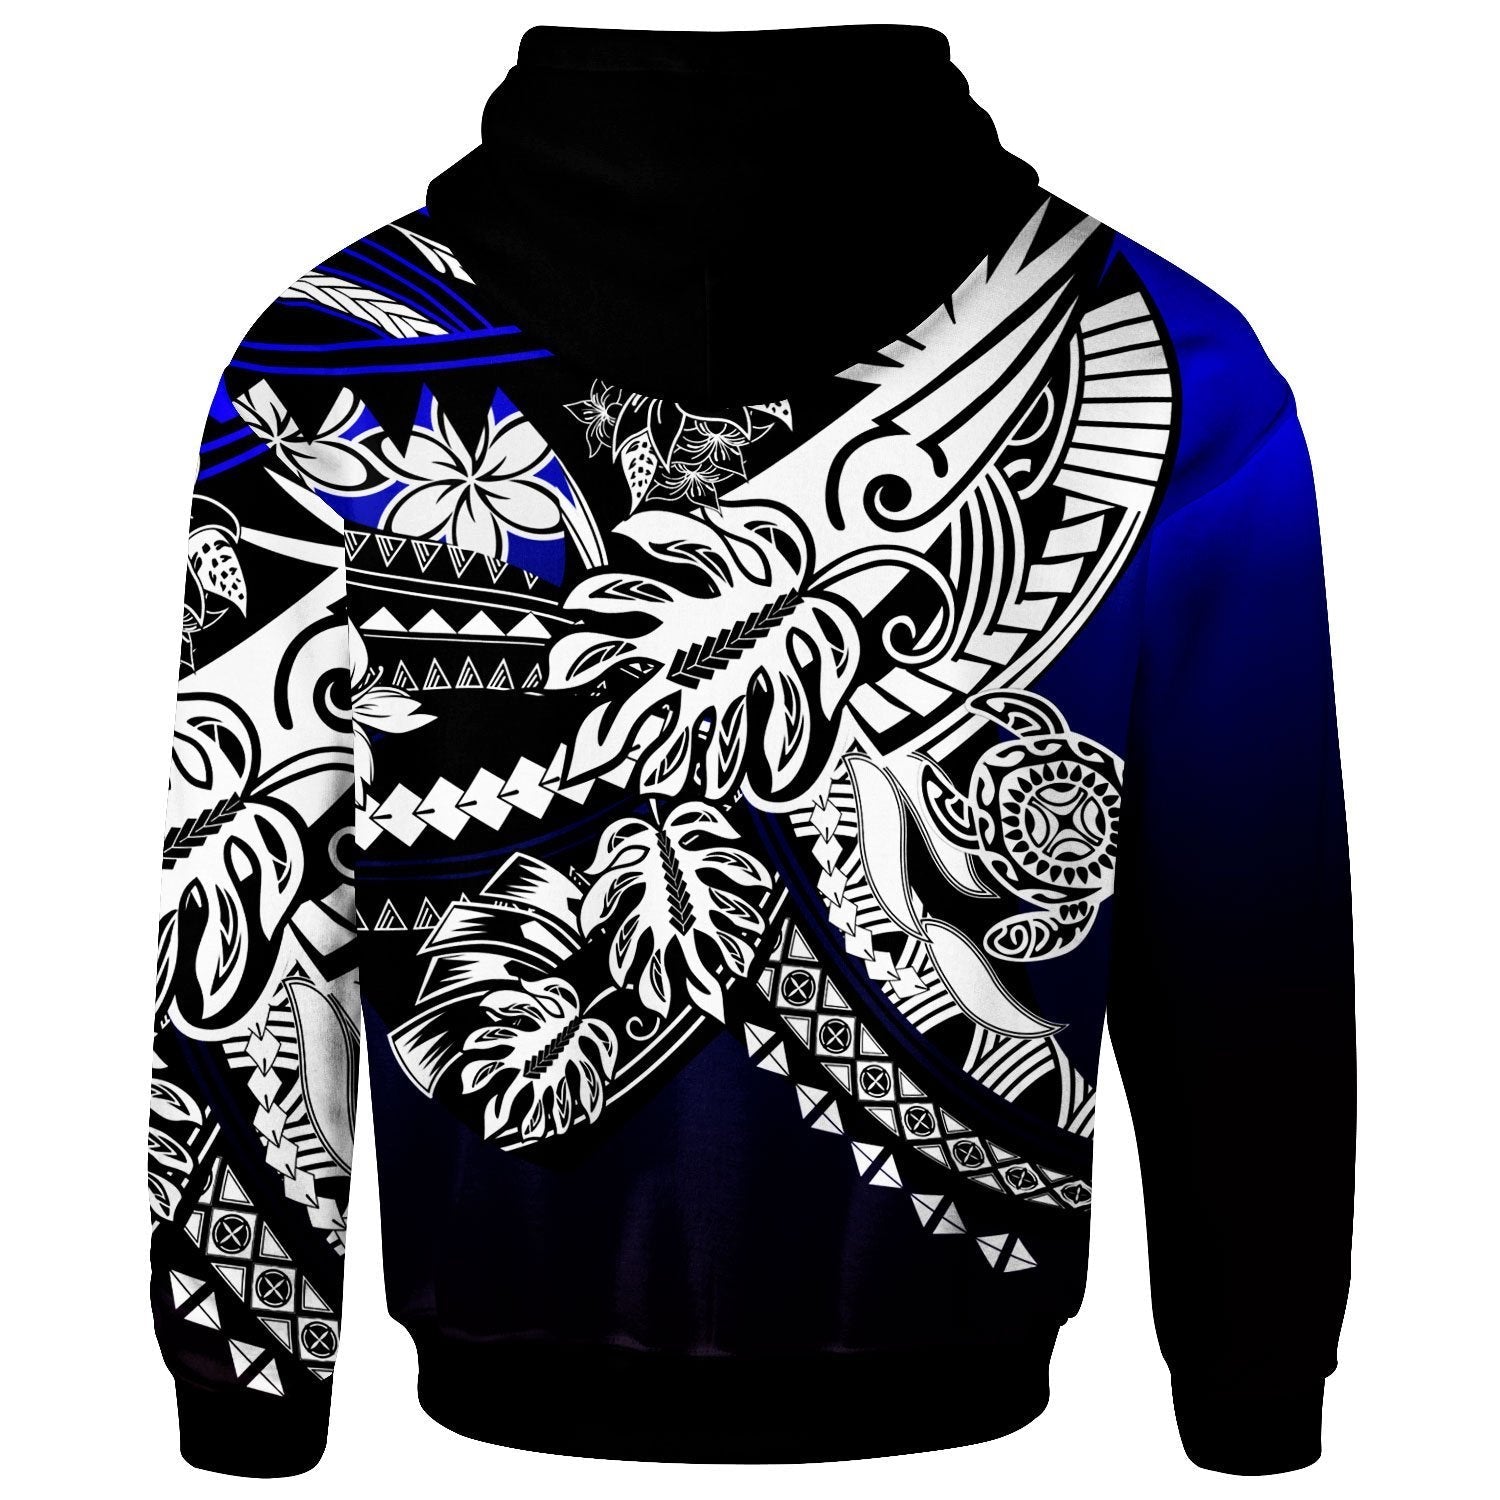 papua-new-guinea-zip-hoodie-tribal-jungle-pattern-blue-color